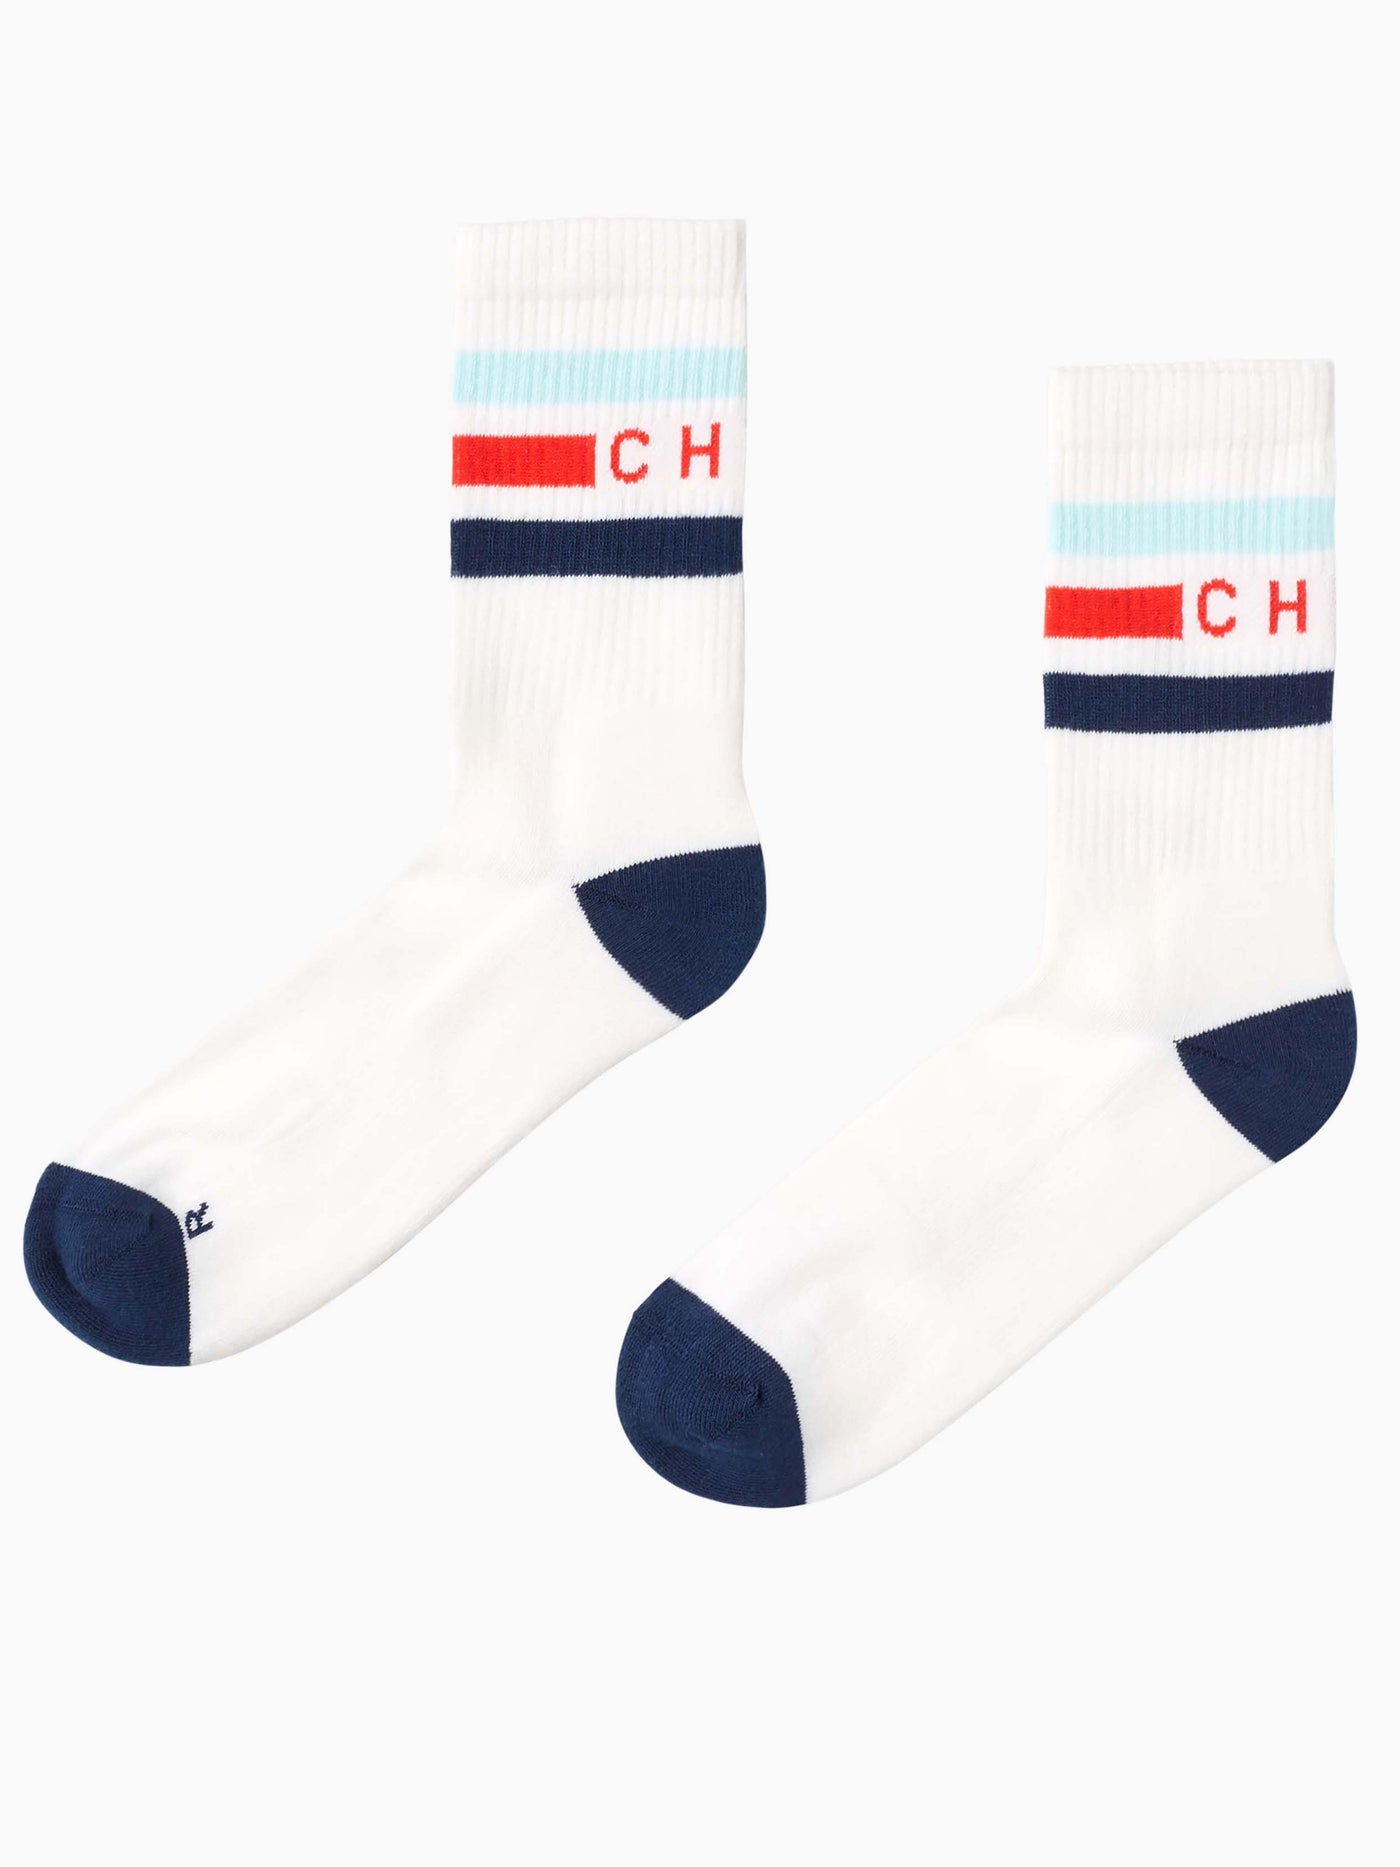 CHPT3 White and Blue Cycling Socks